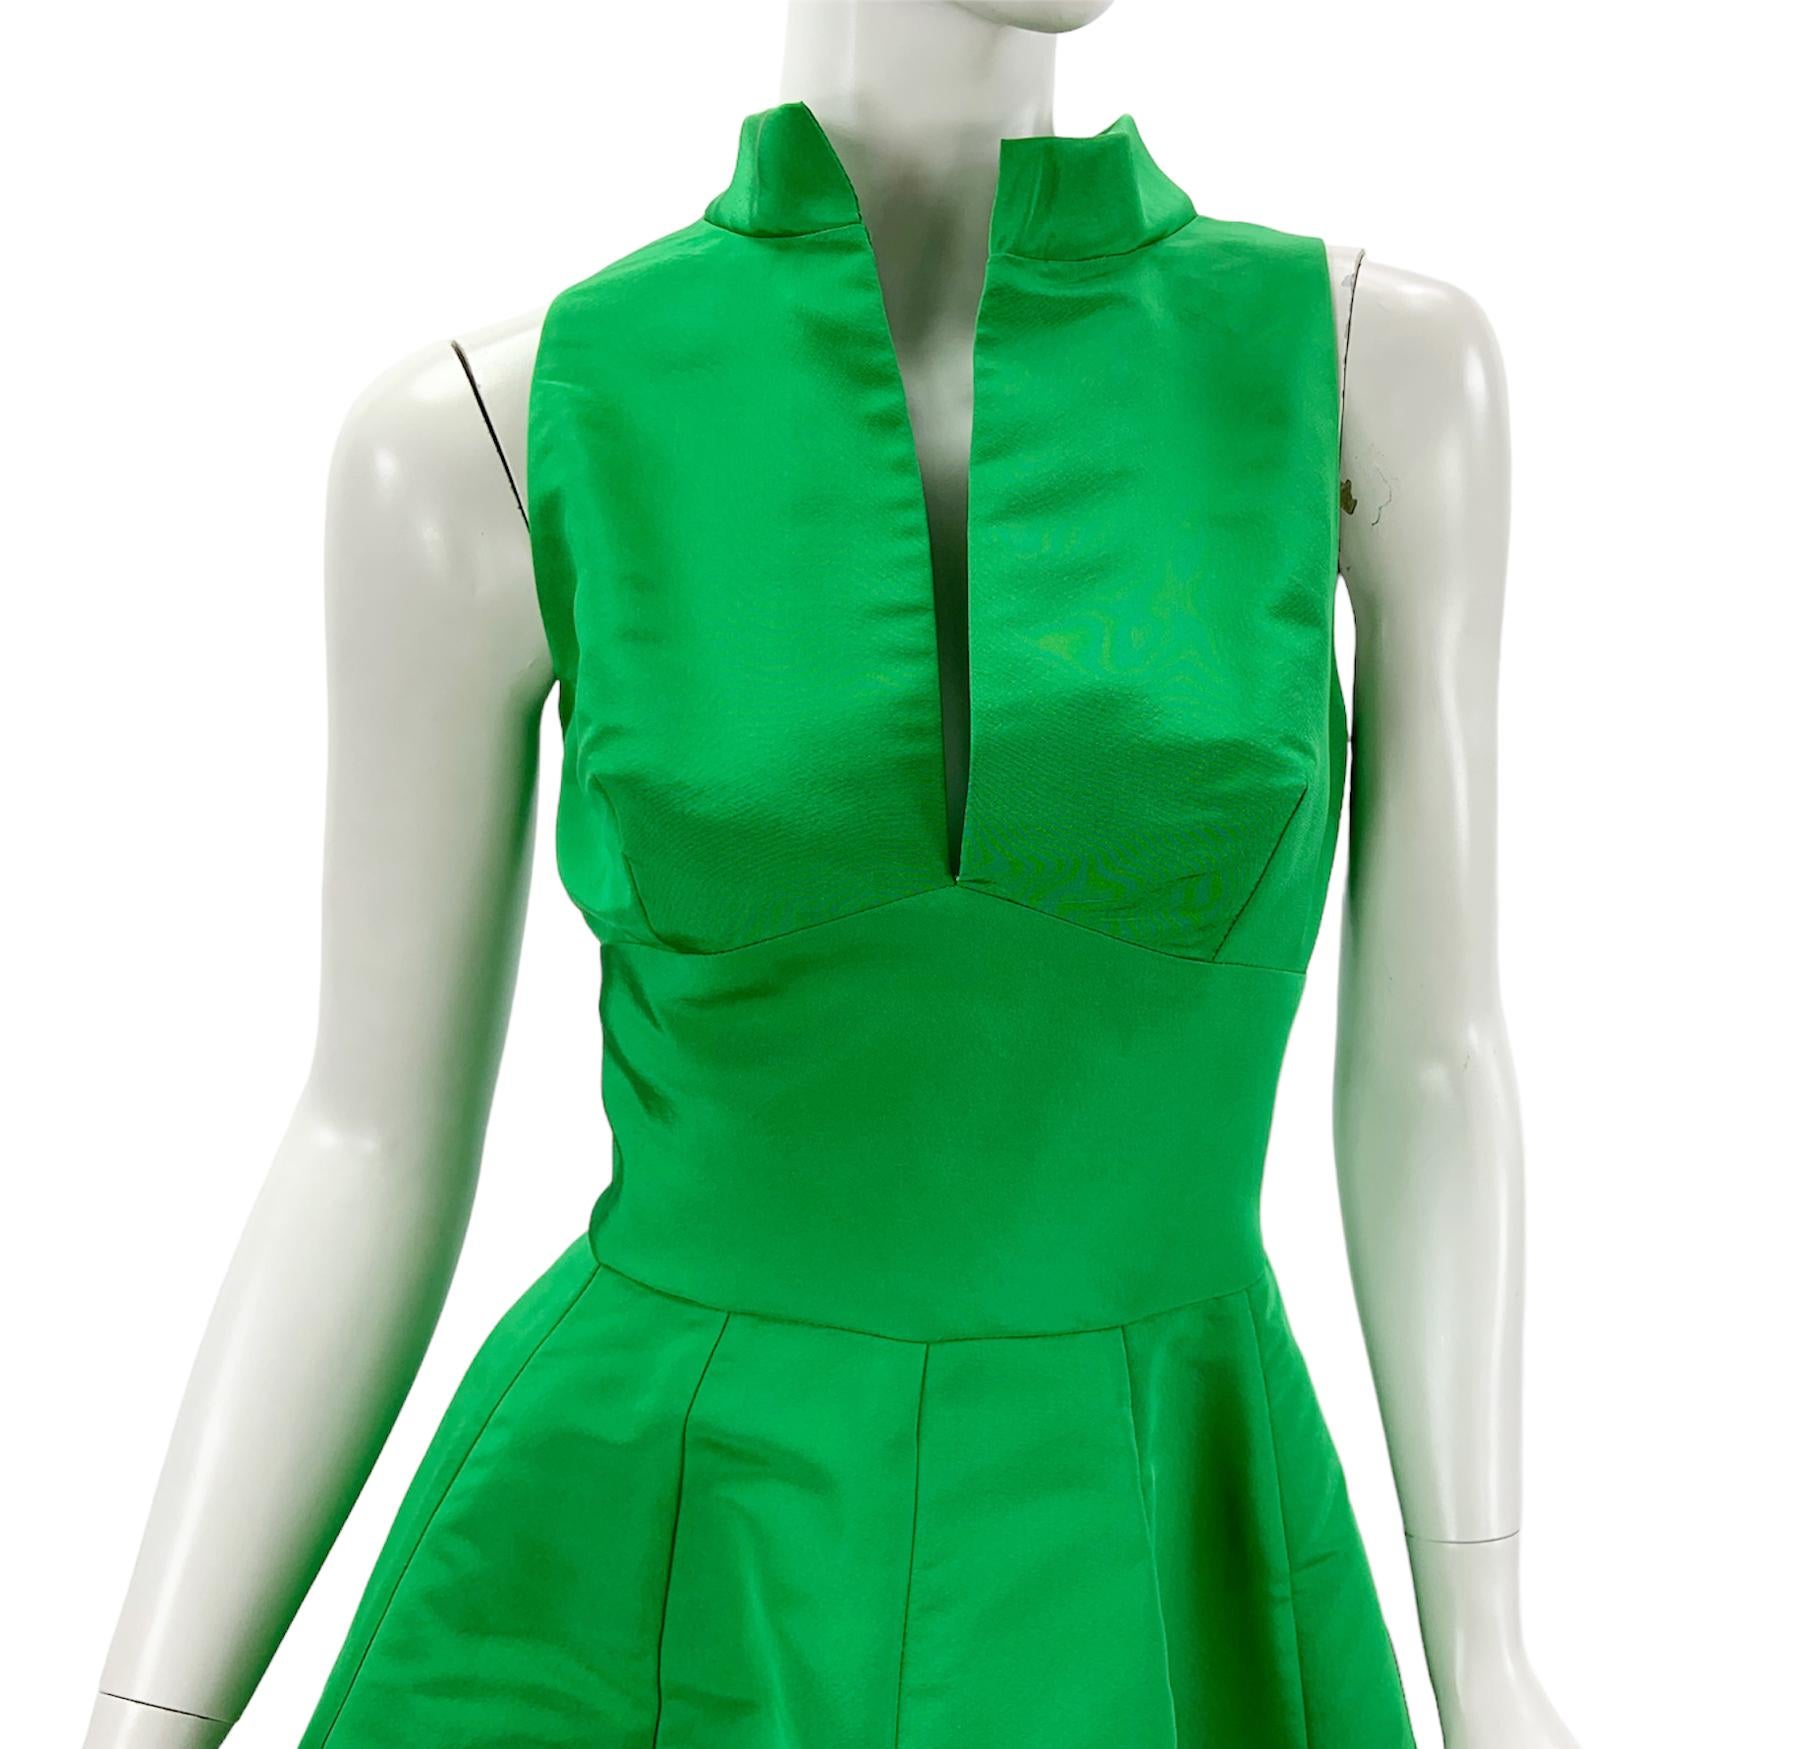 NWT Oscar de la Renta $5490 S/S 2015 Green Silk Taffeta Feather Beads Dress US 6 For Sale 1